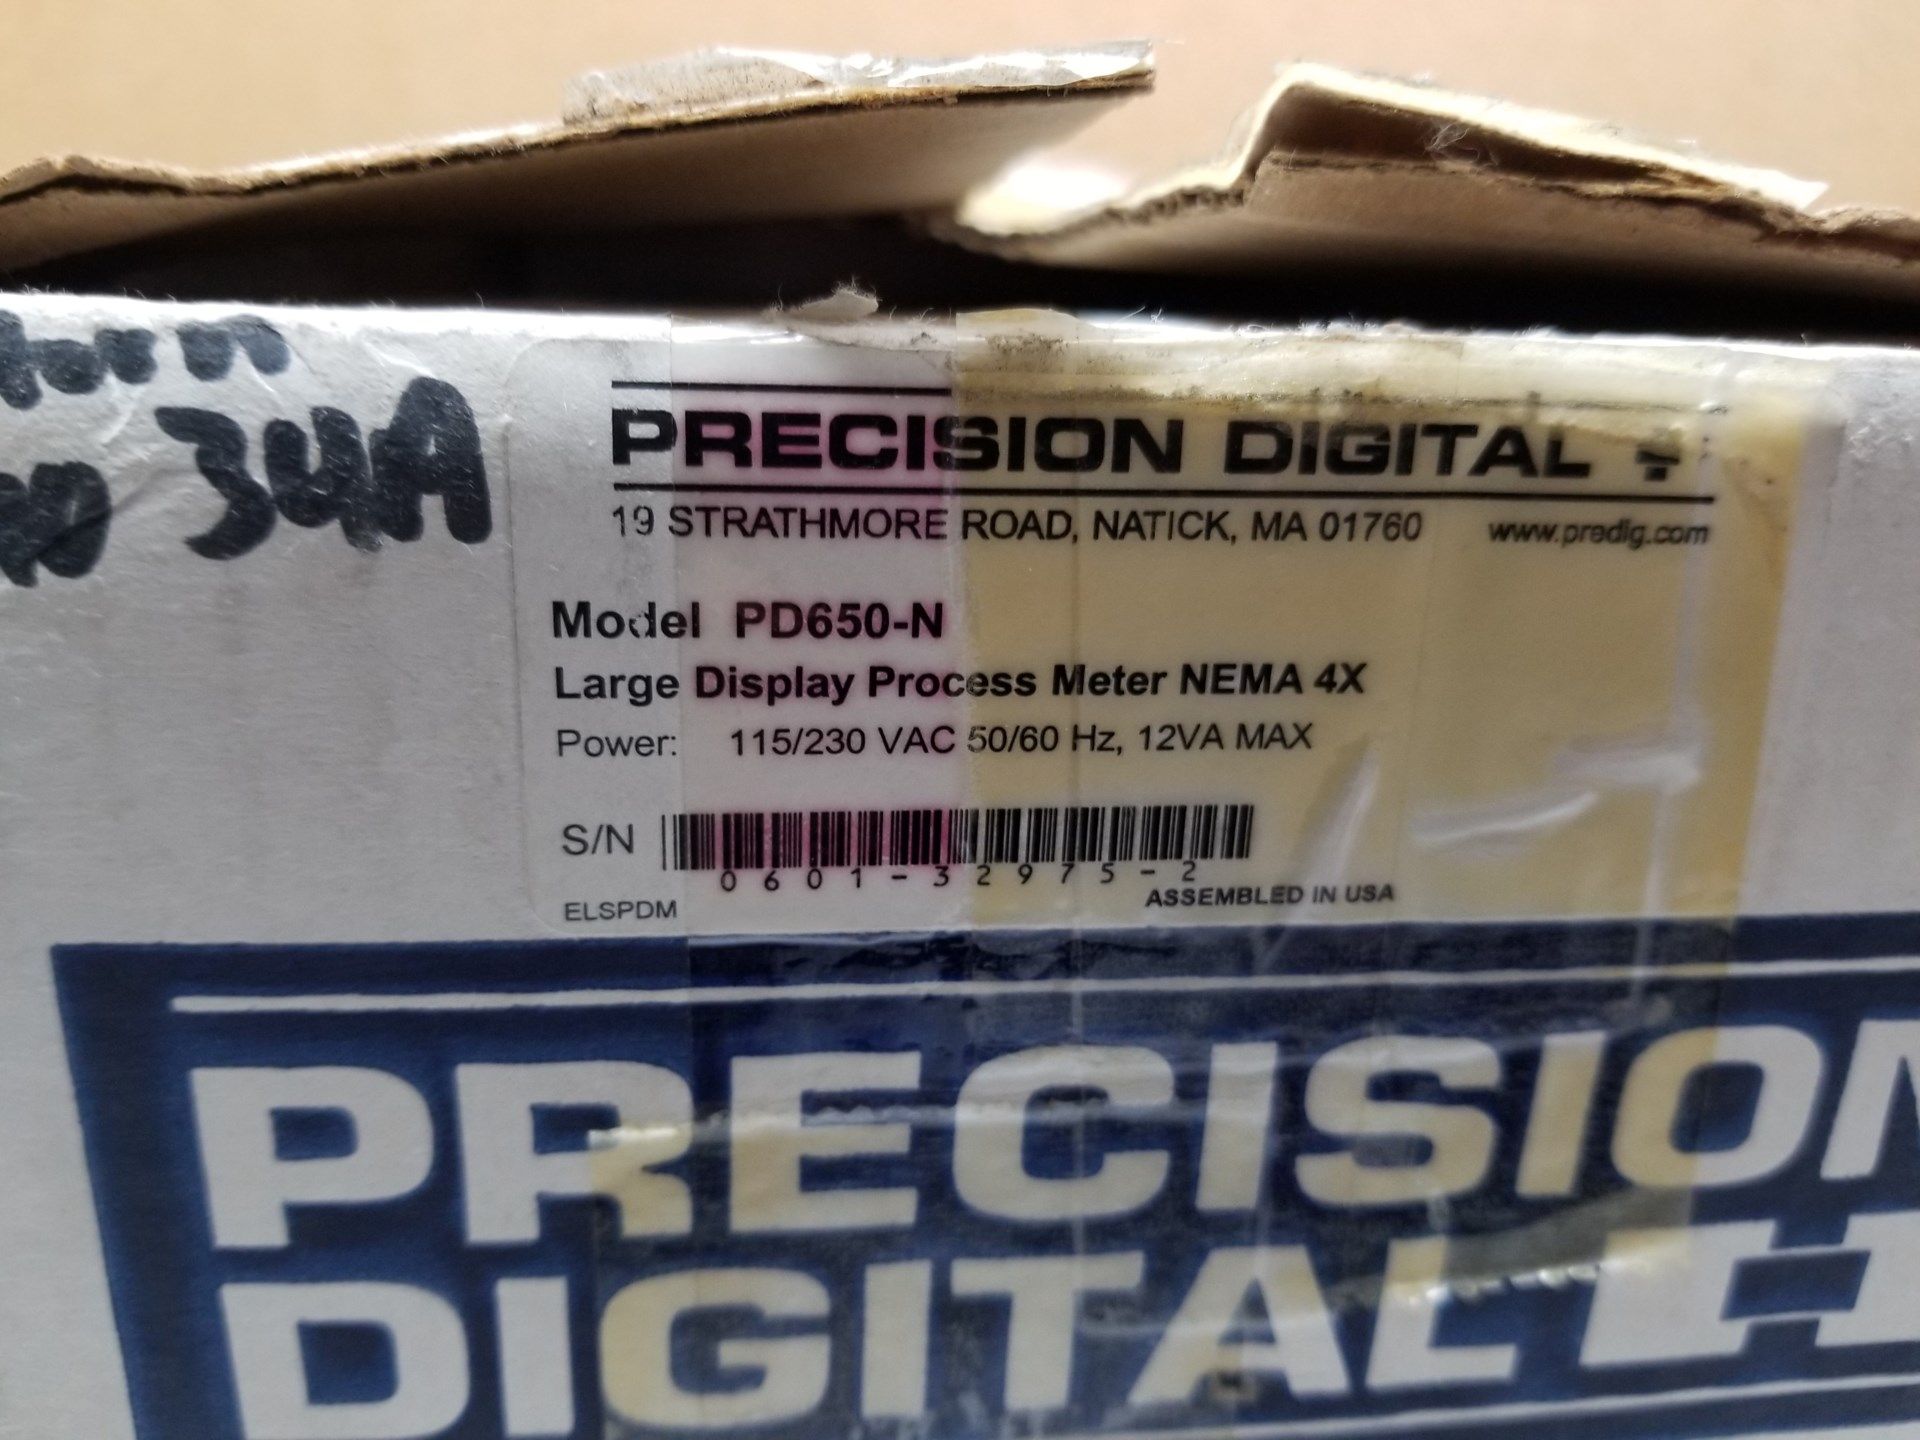 New Precision Digital Process Meter - Image 2 of 4